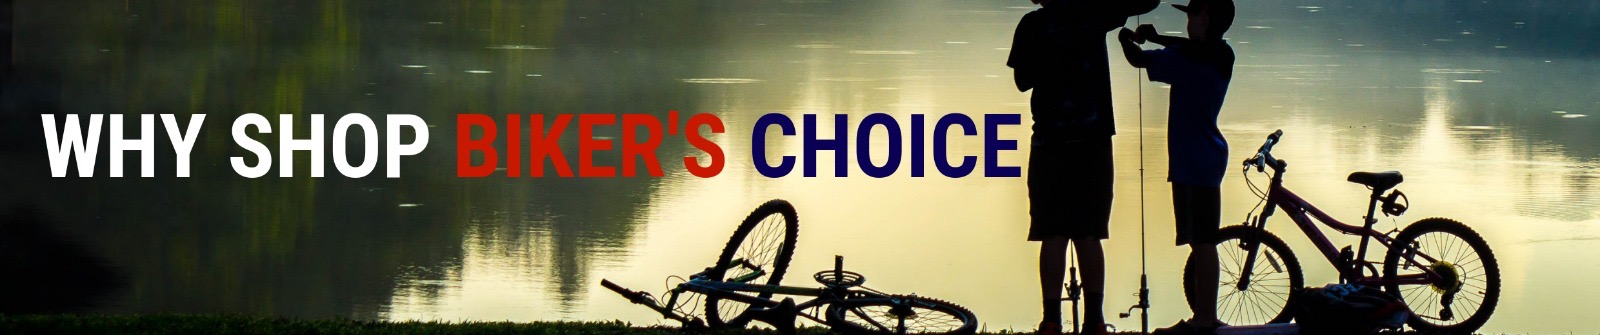 Why Shop Biker's Choice